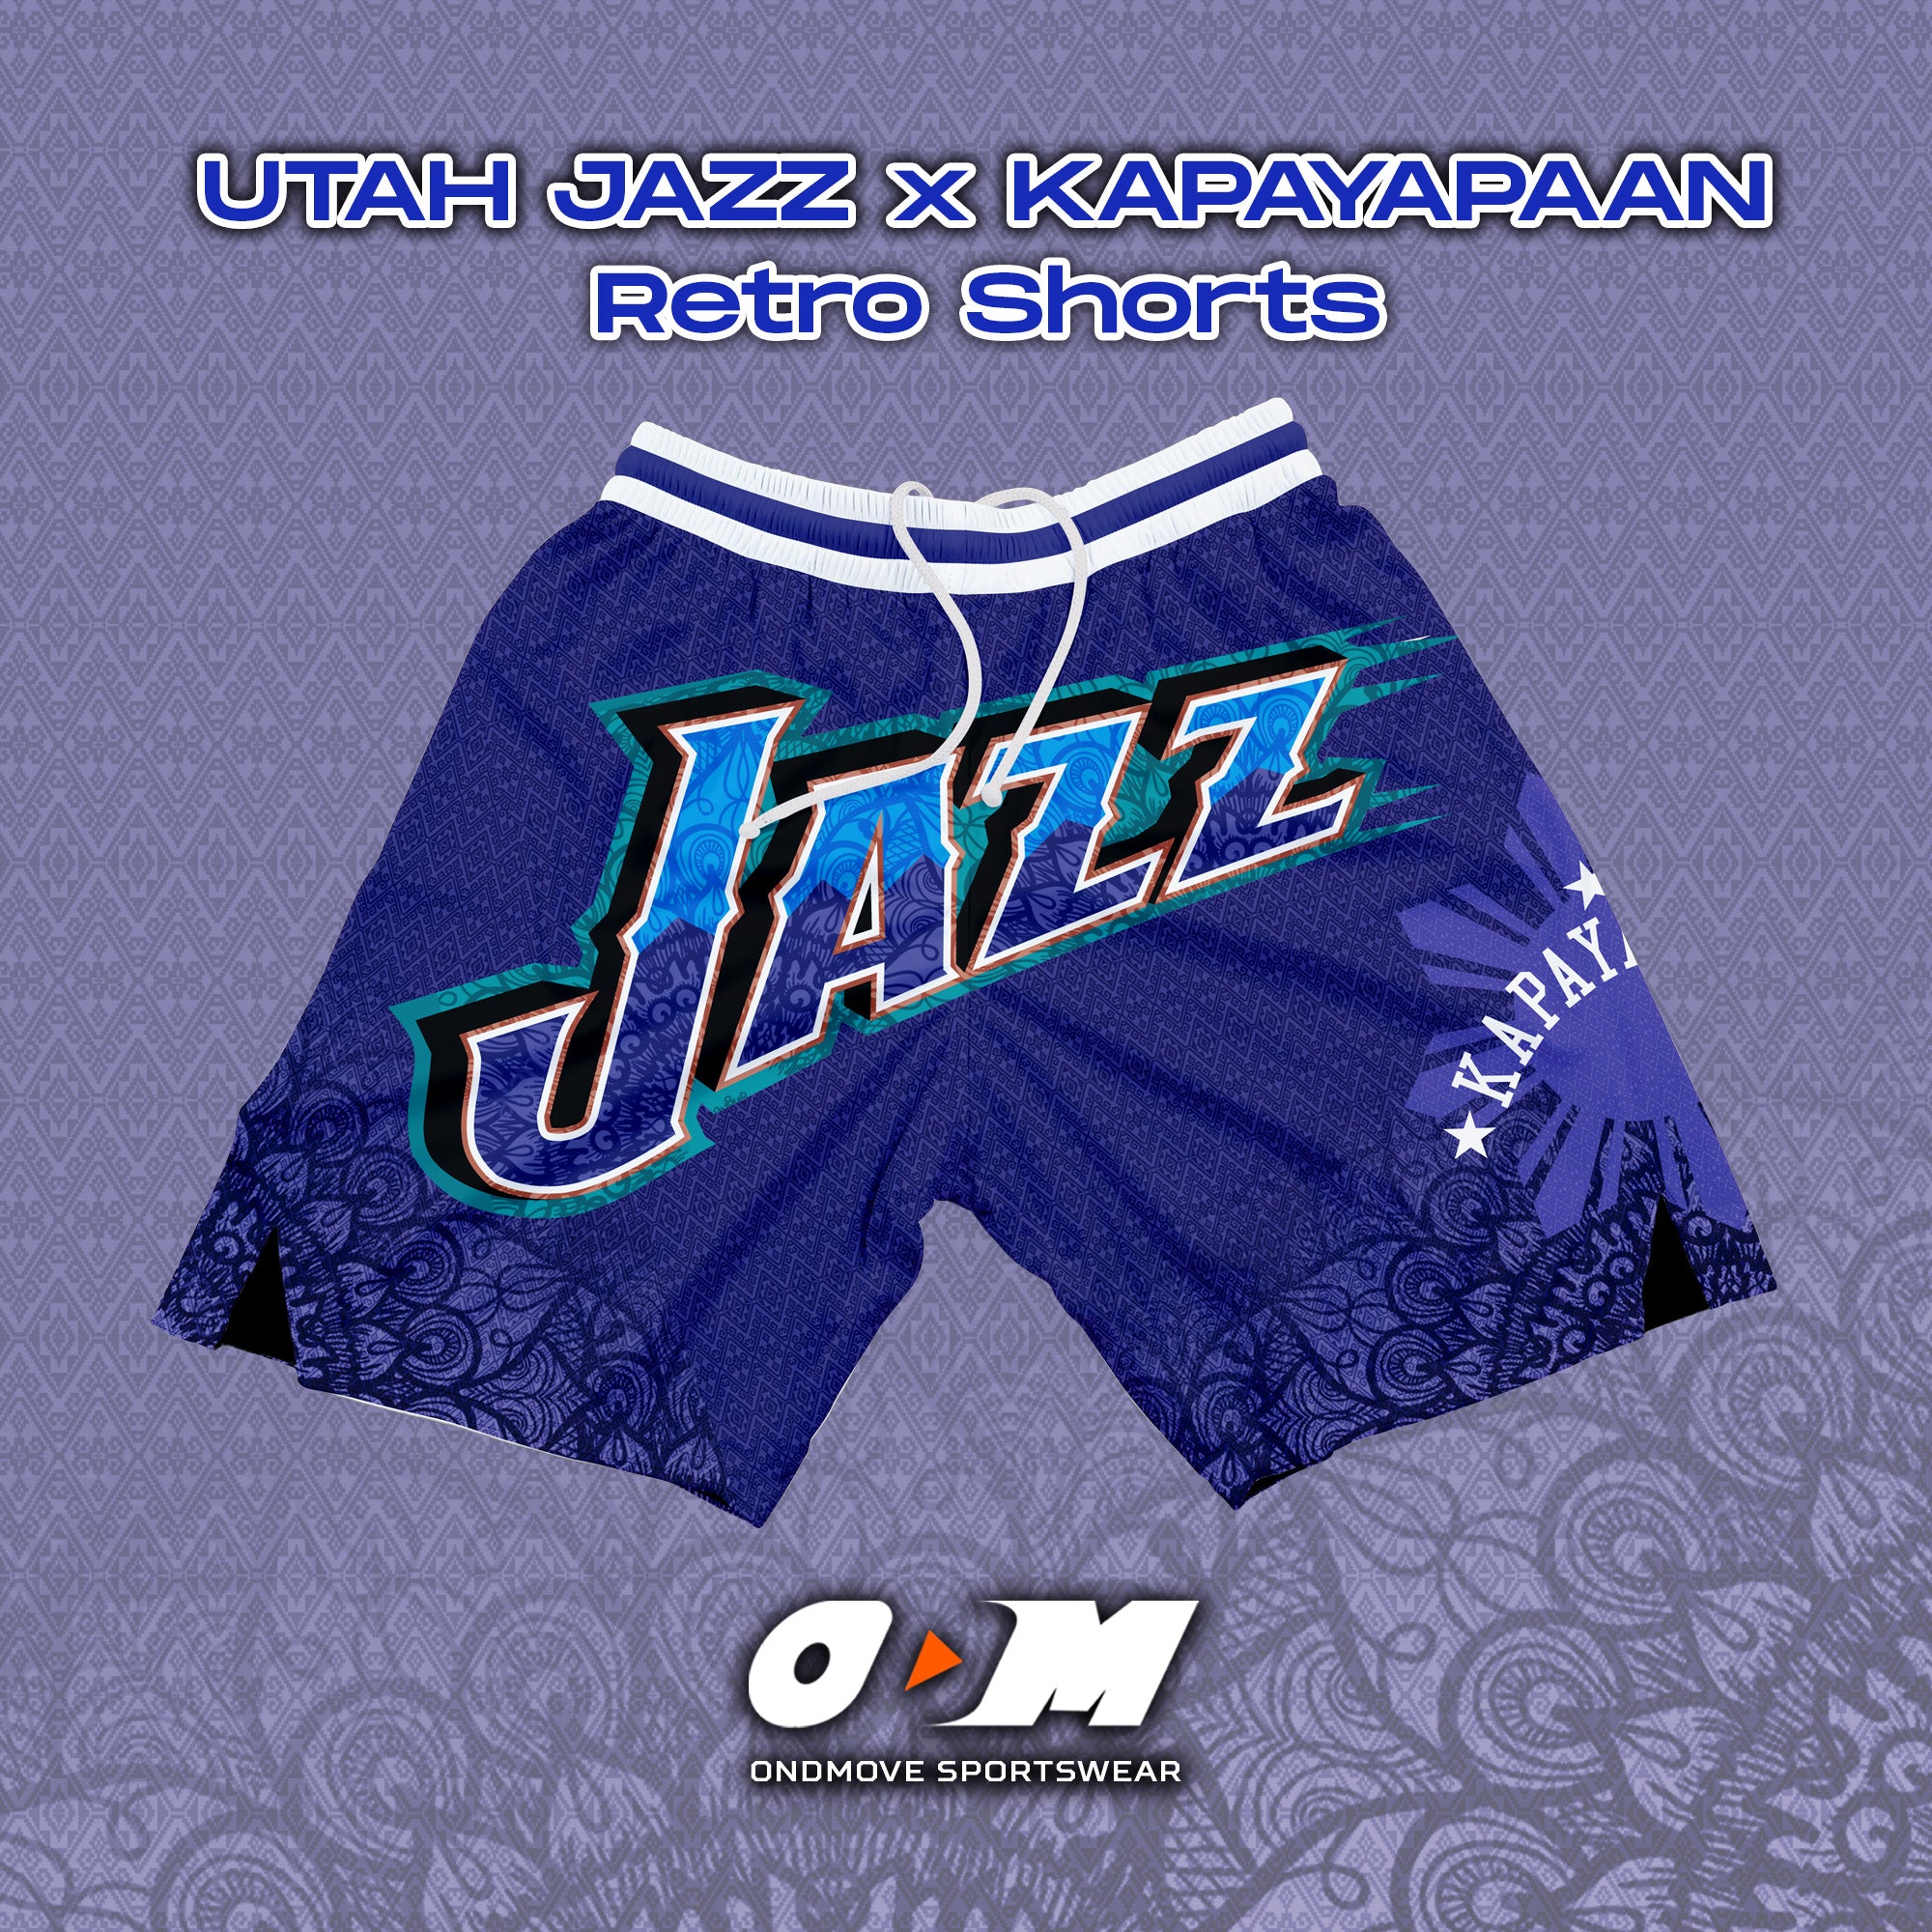 Utah Jazz x Kapayapaan Retro Shorts